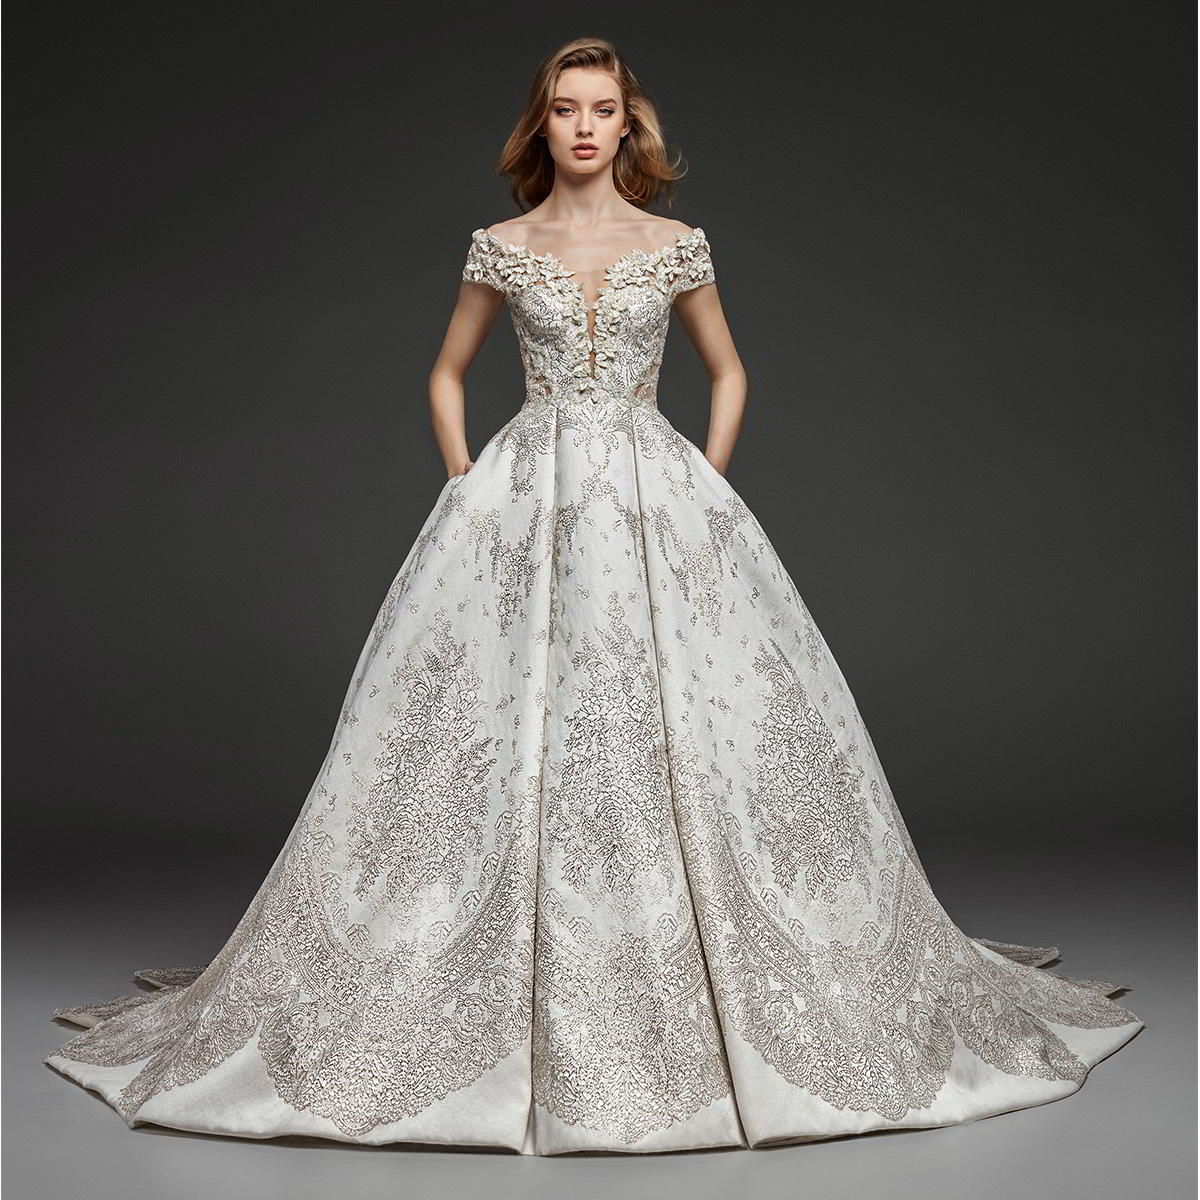 Atelier Pronovias 2019 Wedding Dresses — “In Bloom” Bridal Collection | Wedding